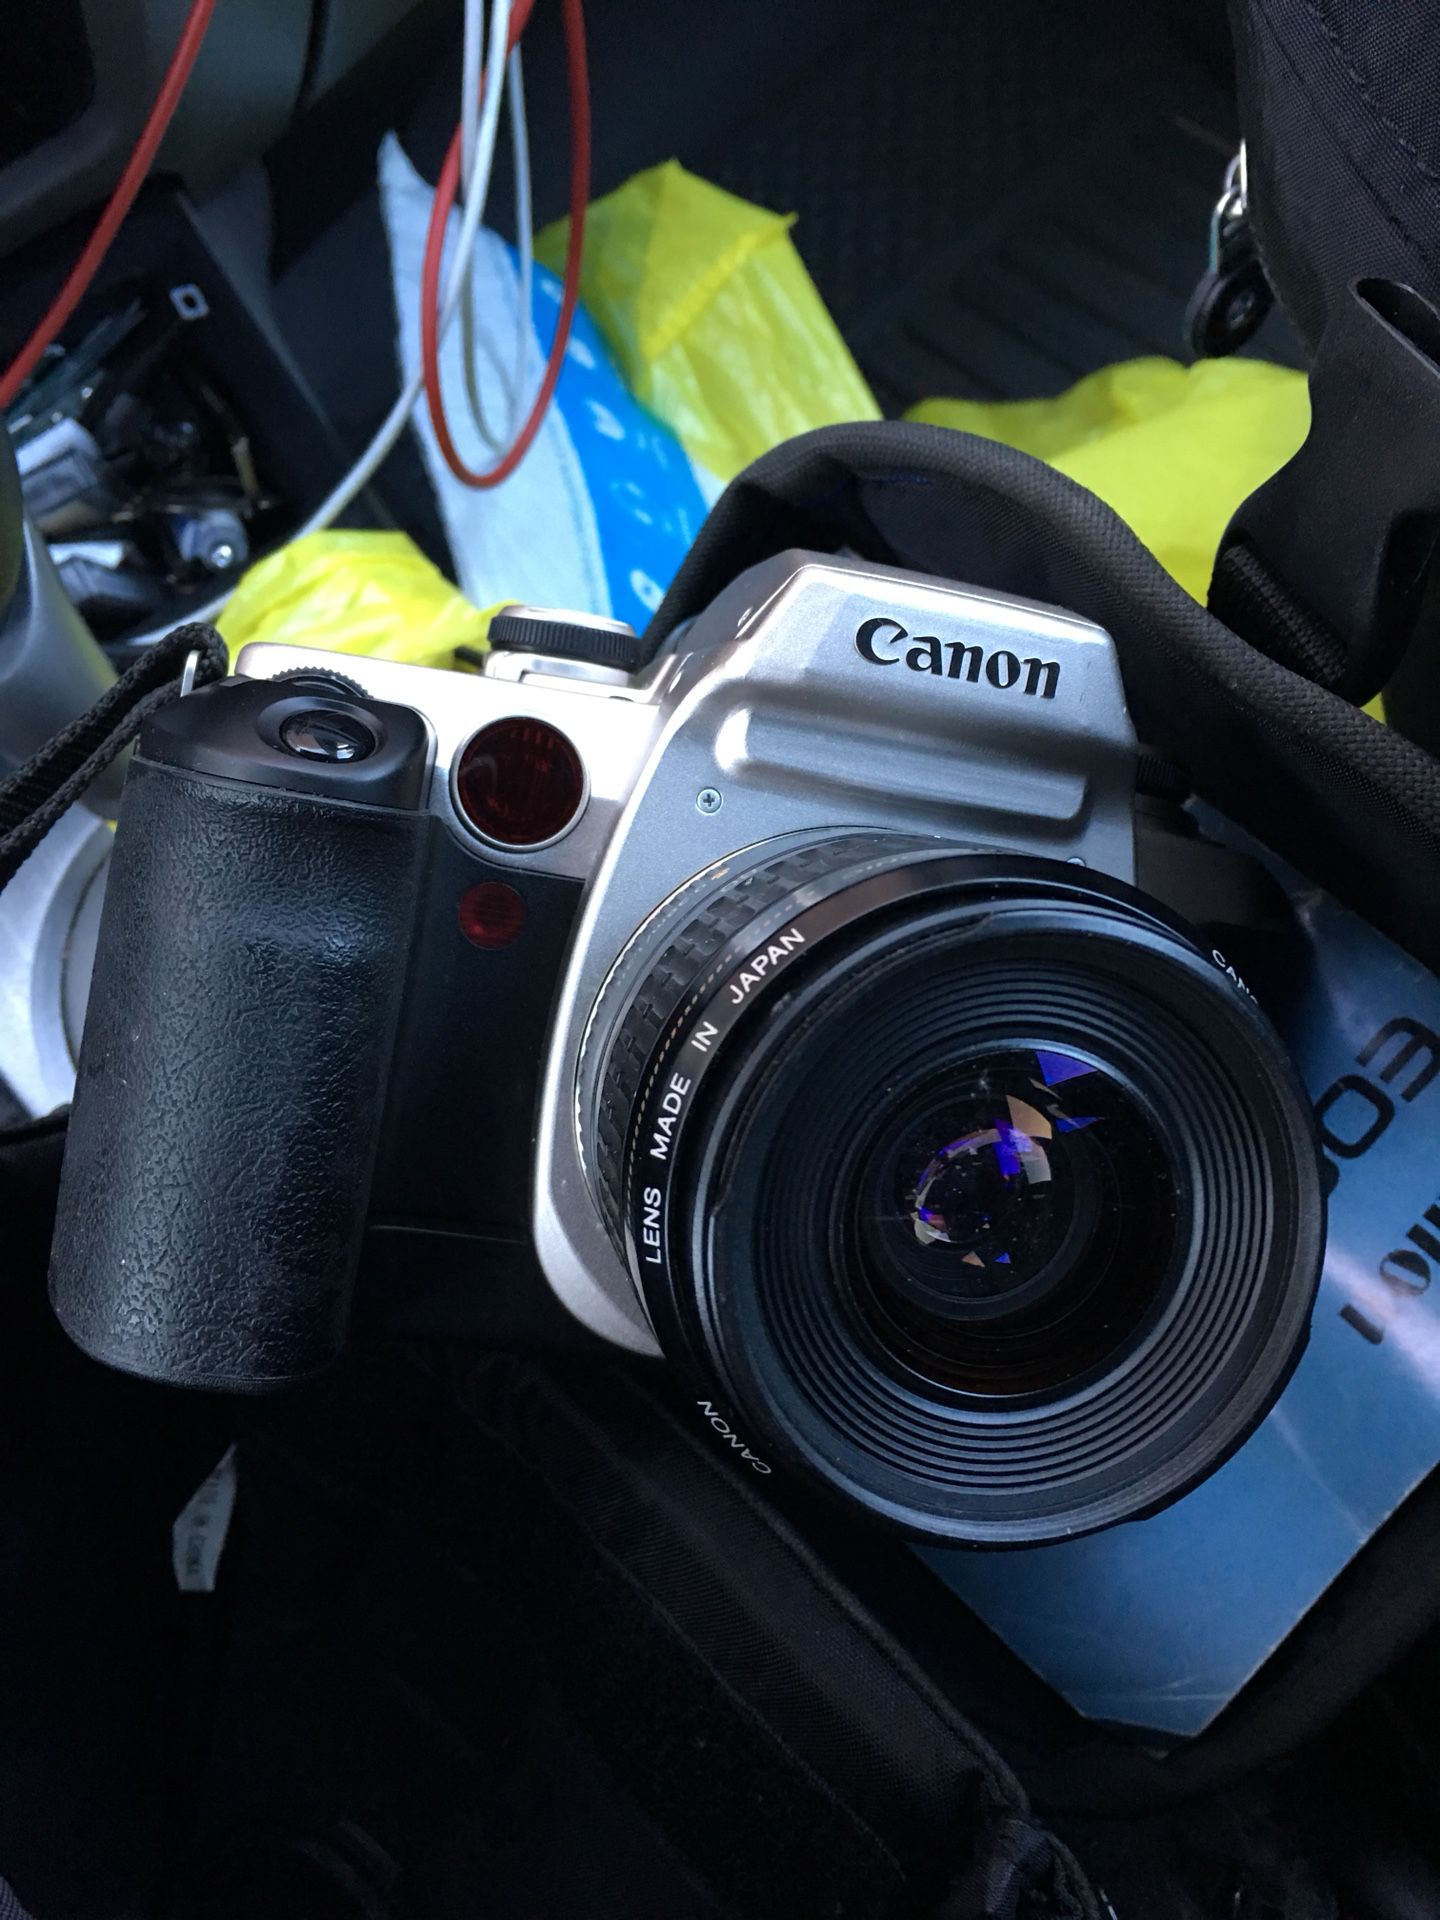 Canon Made in Japan (SLR FILM camera) -Not Digital,needs film